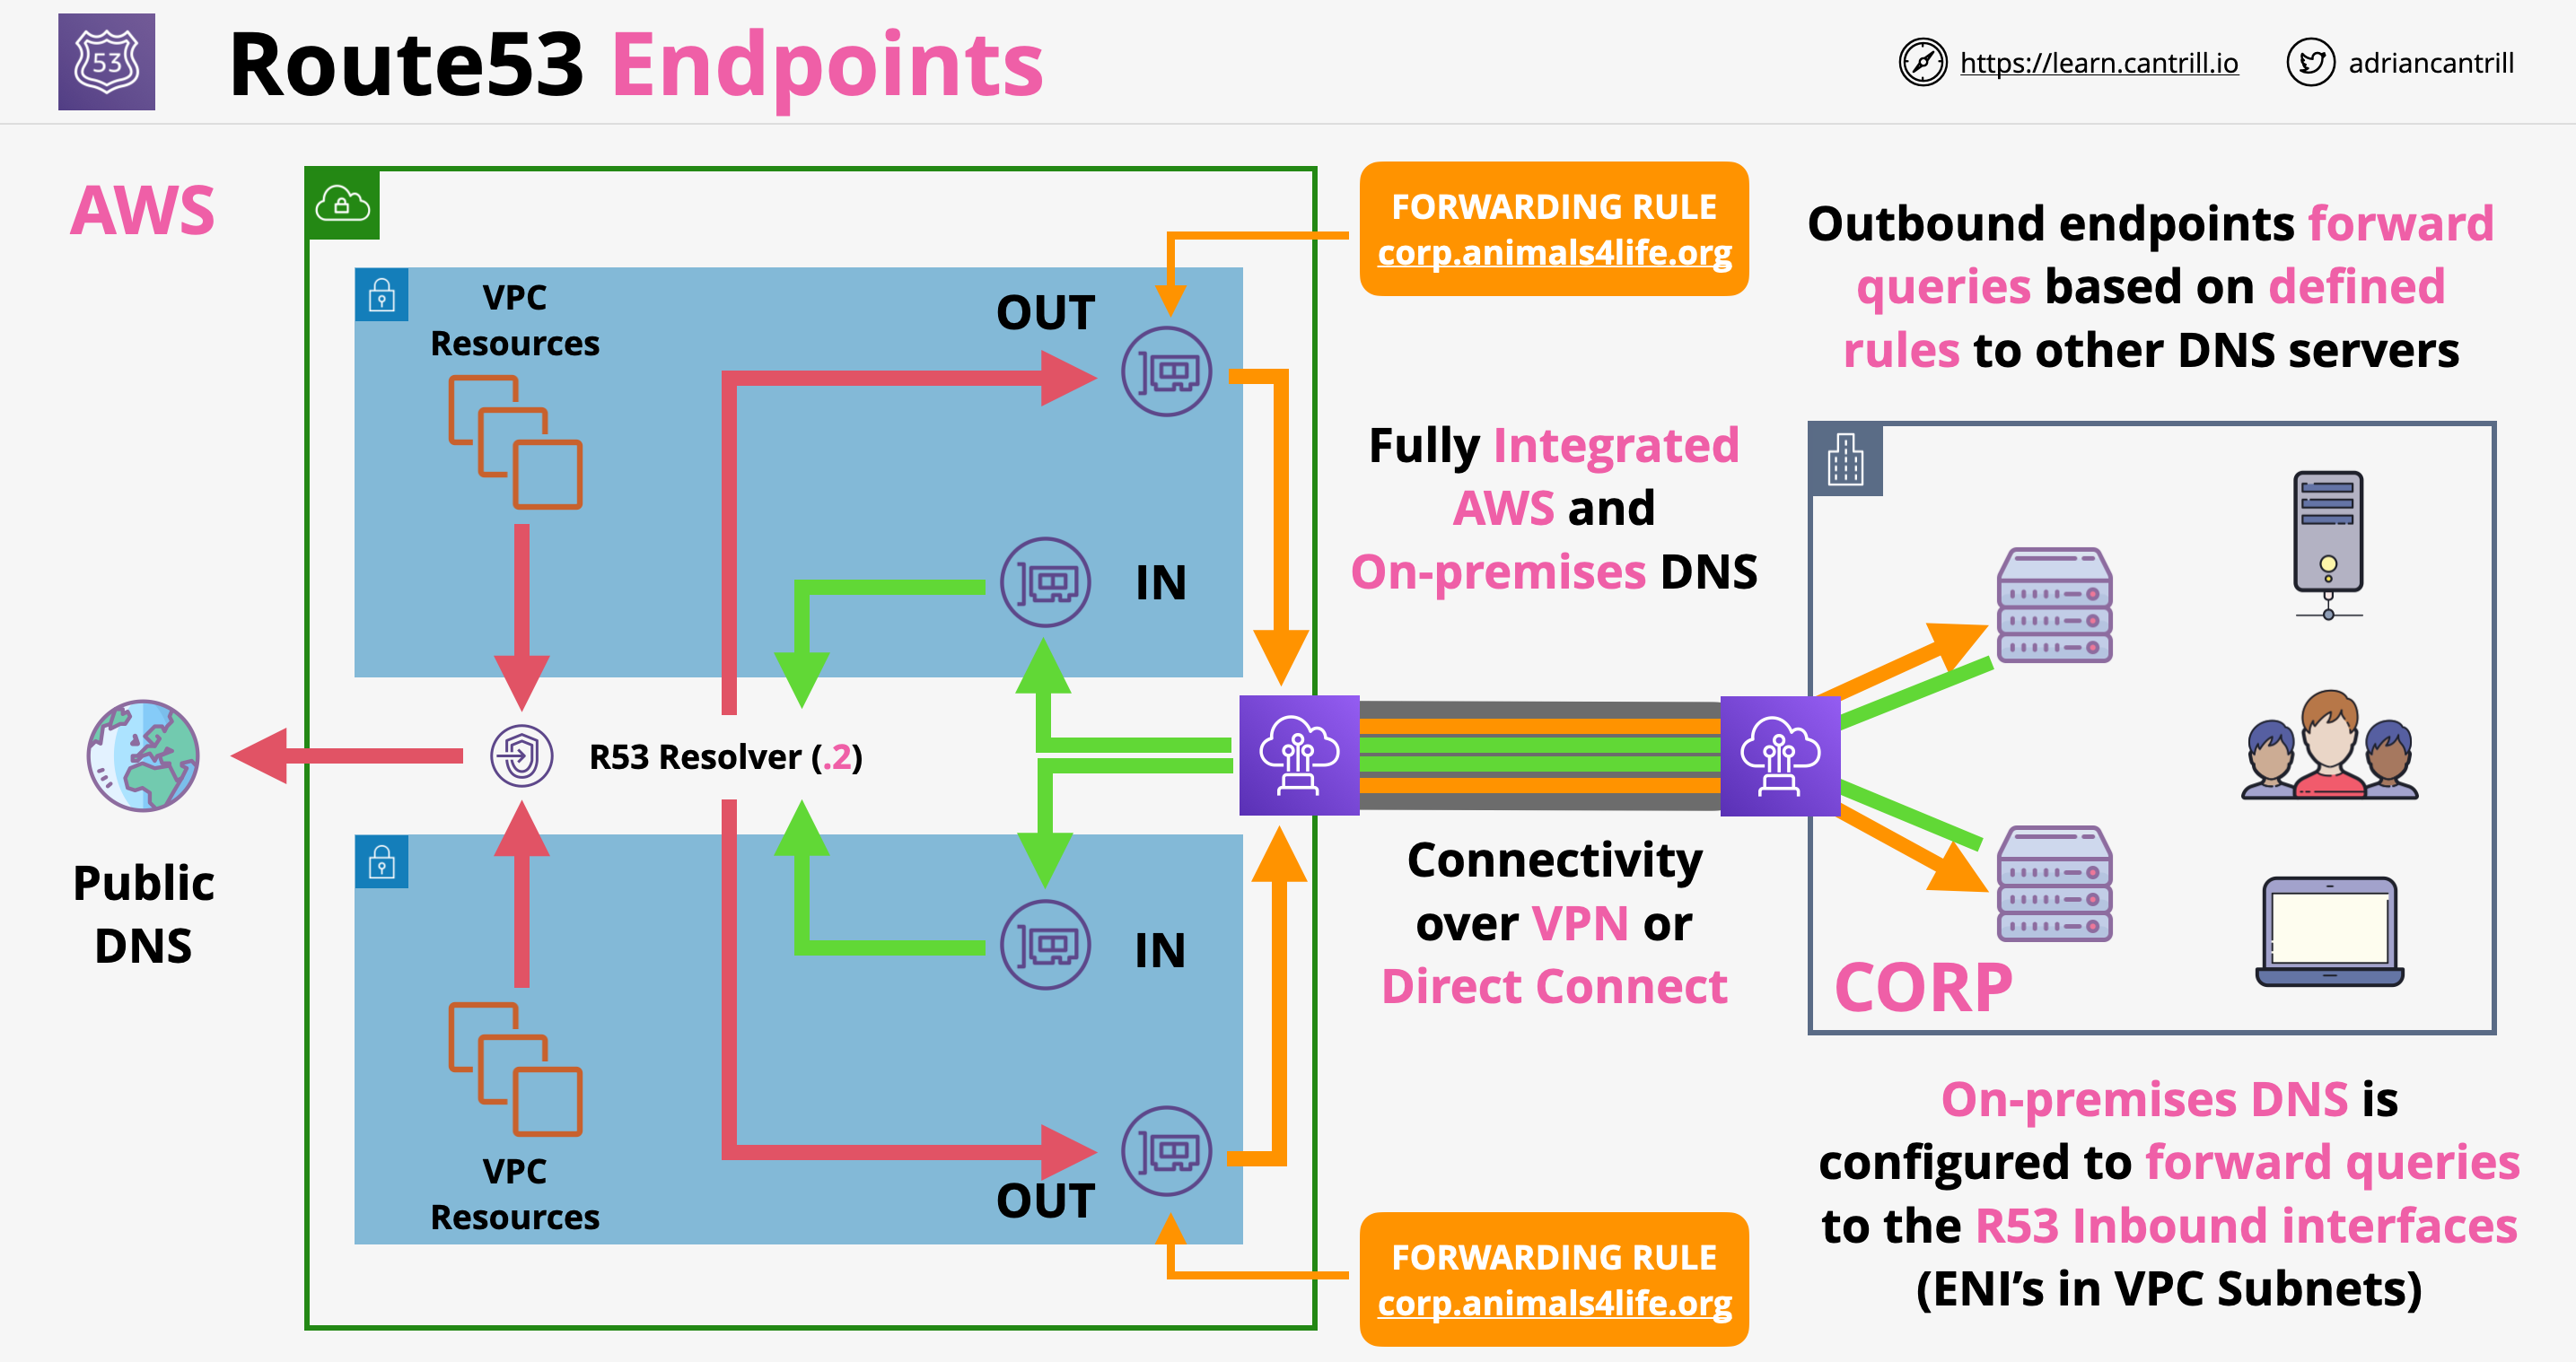 Route53 Endpoints Architecture